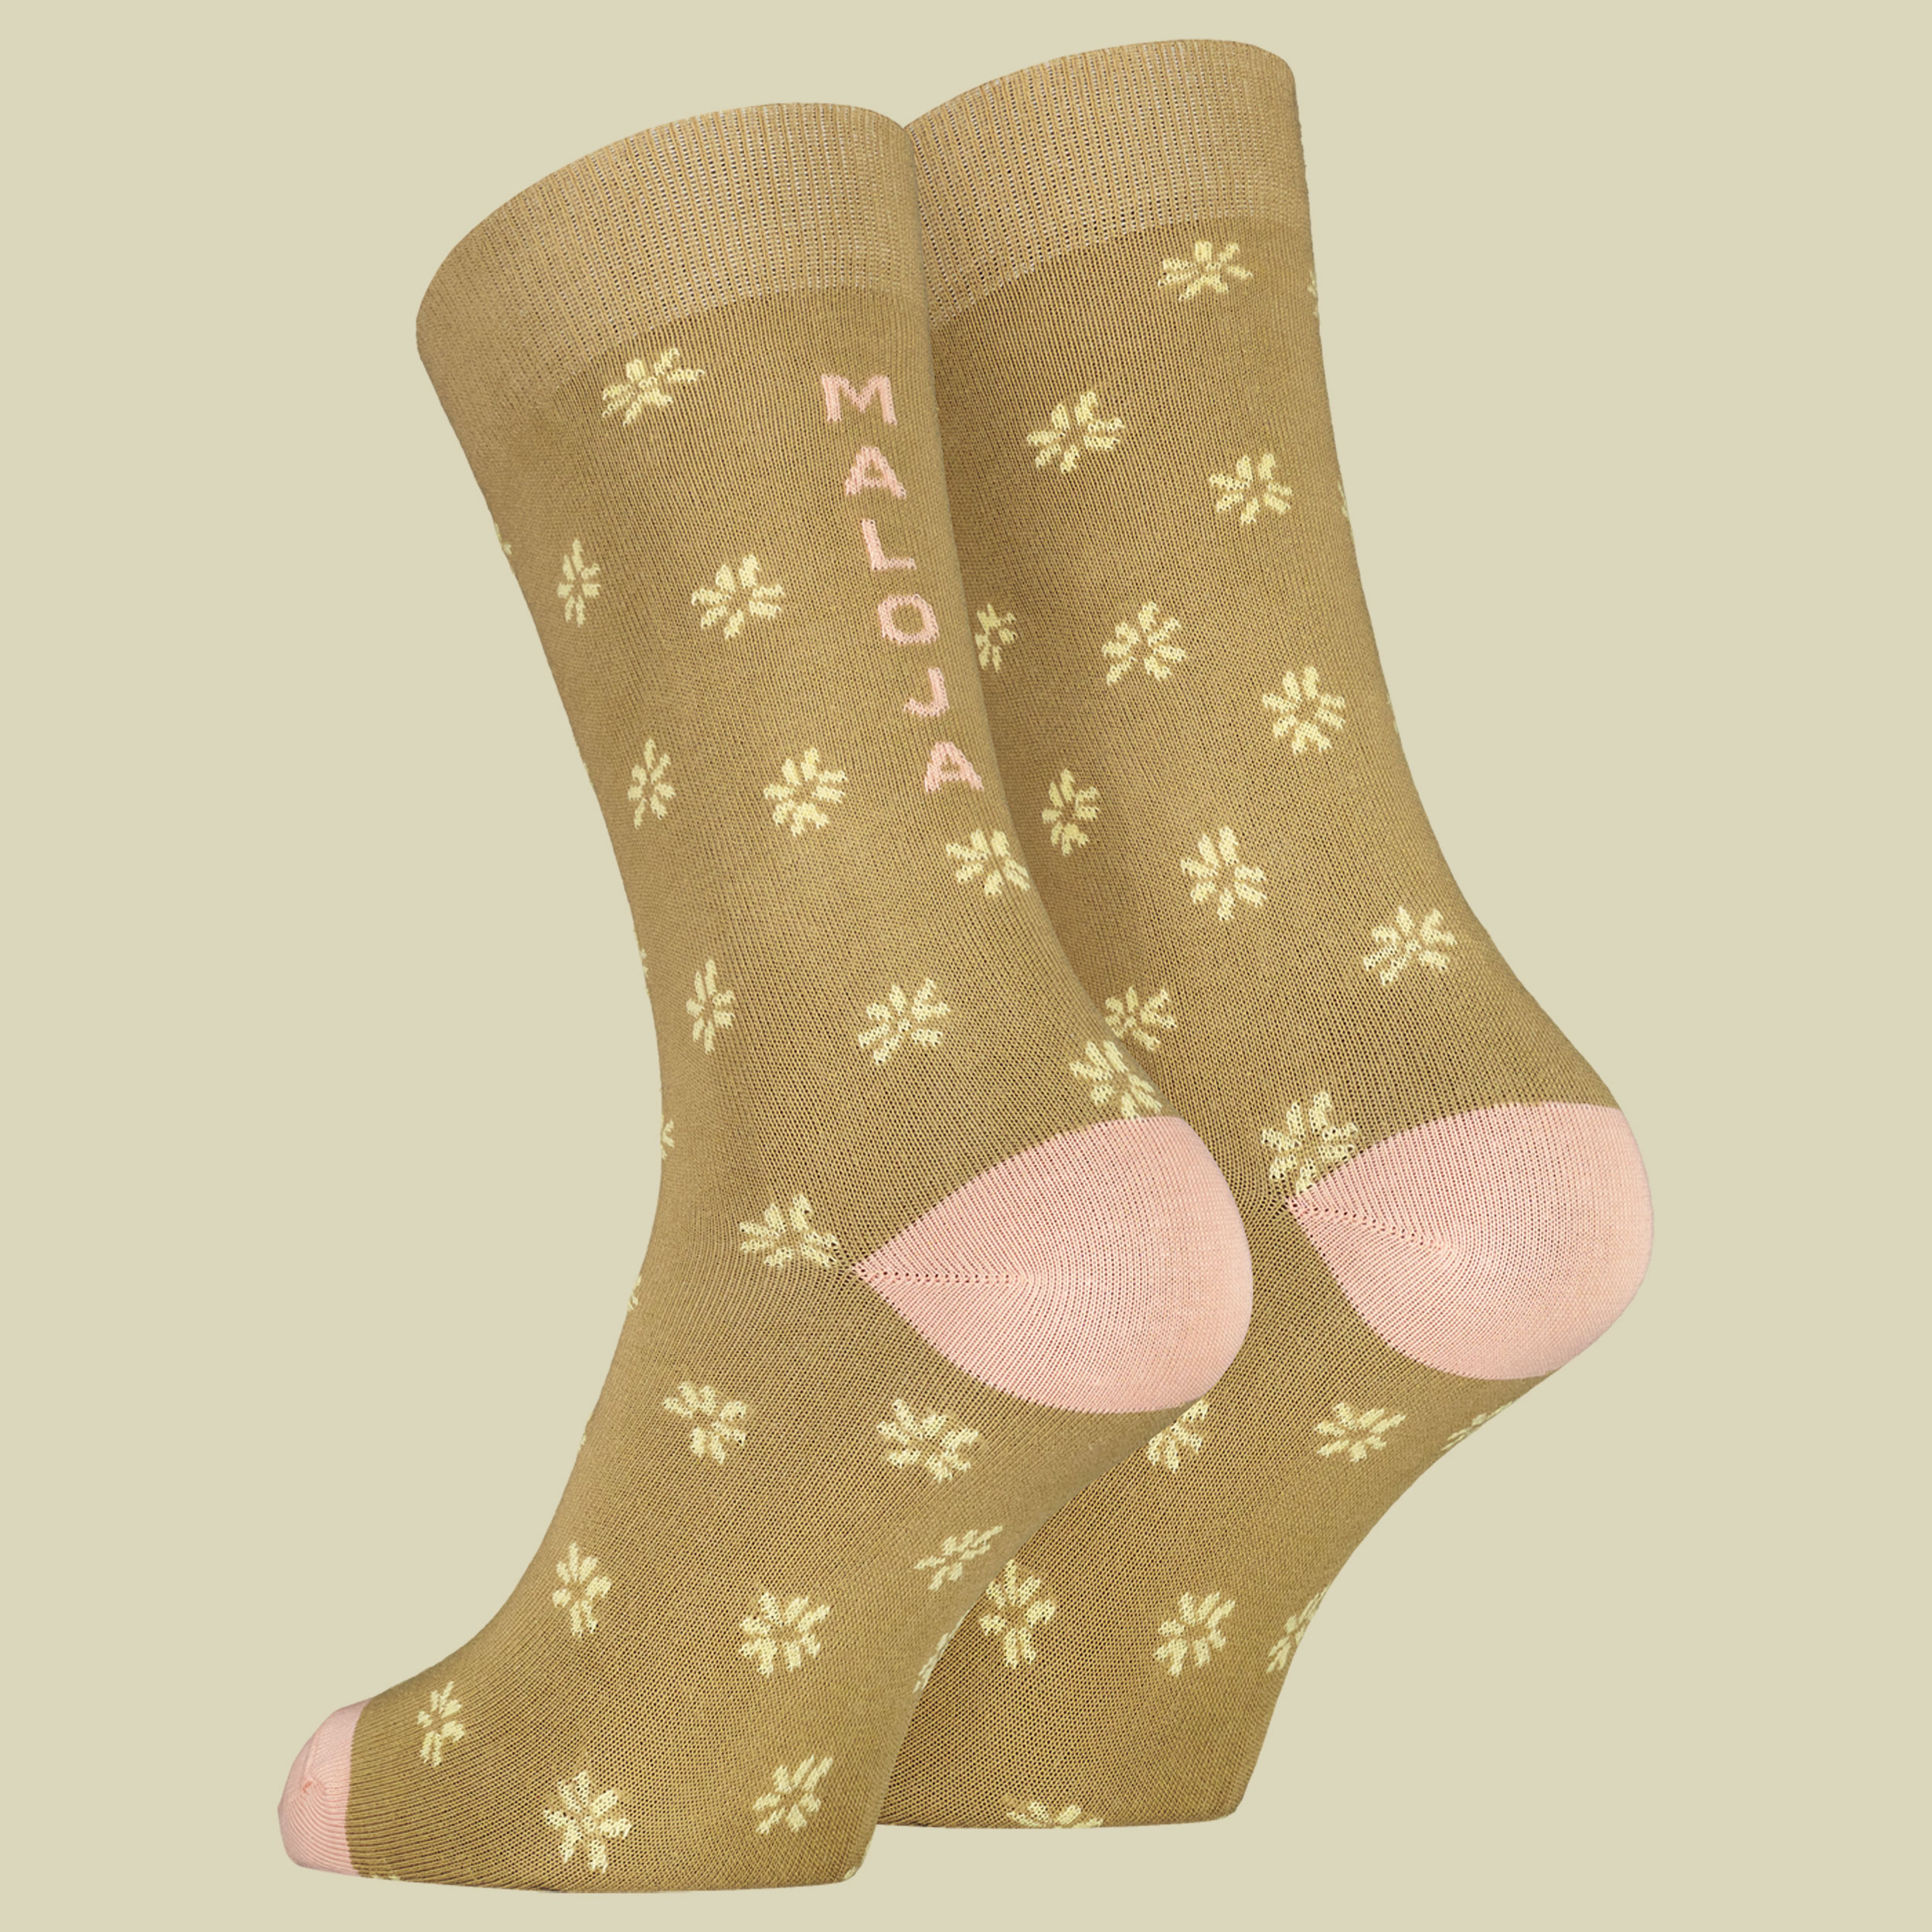 TanayM. Socks Women Größe 39-42 Farbe clay multi